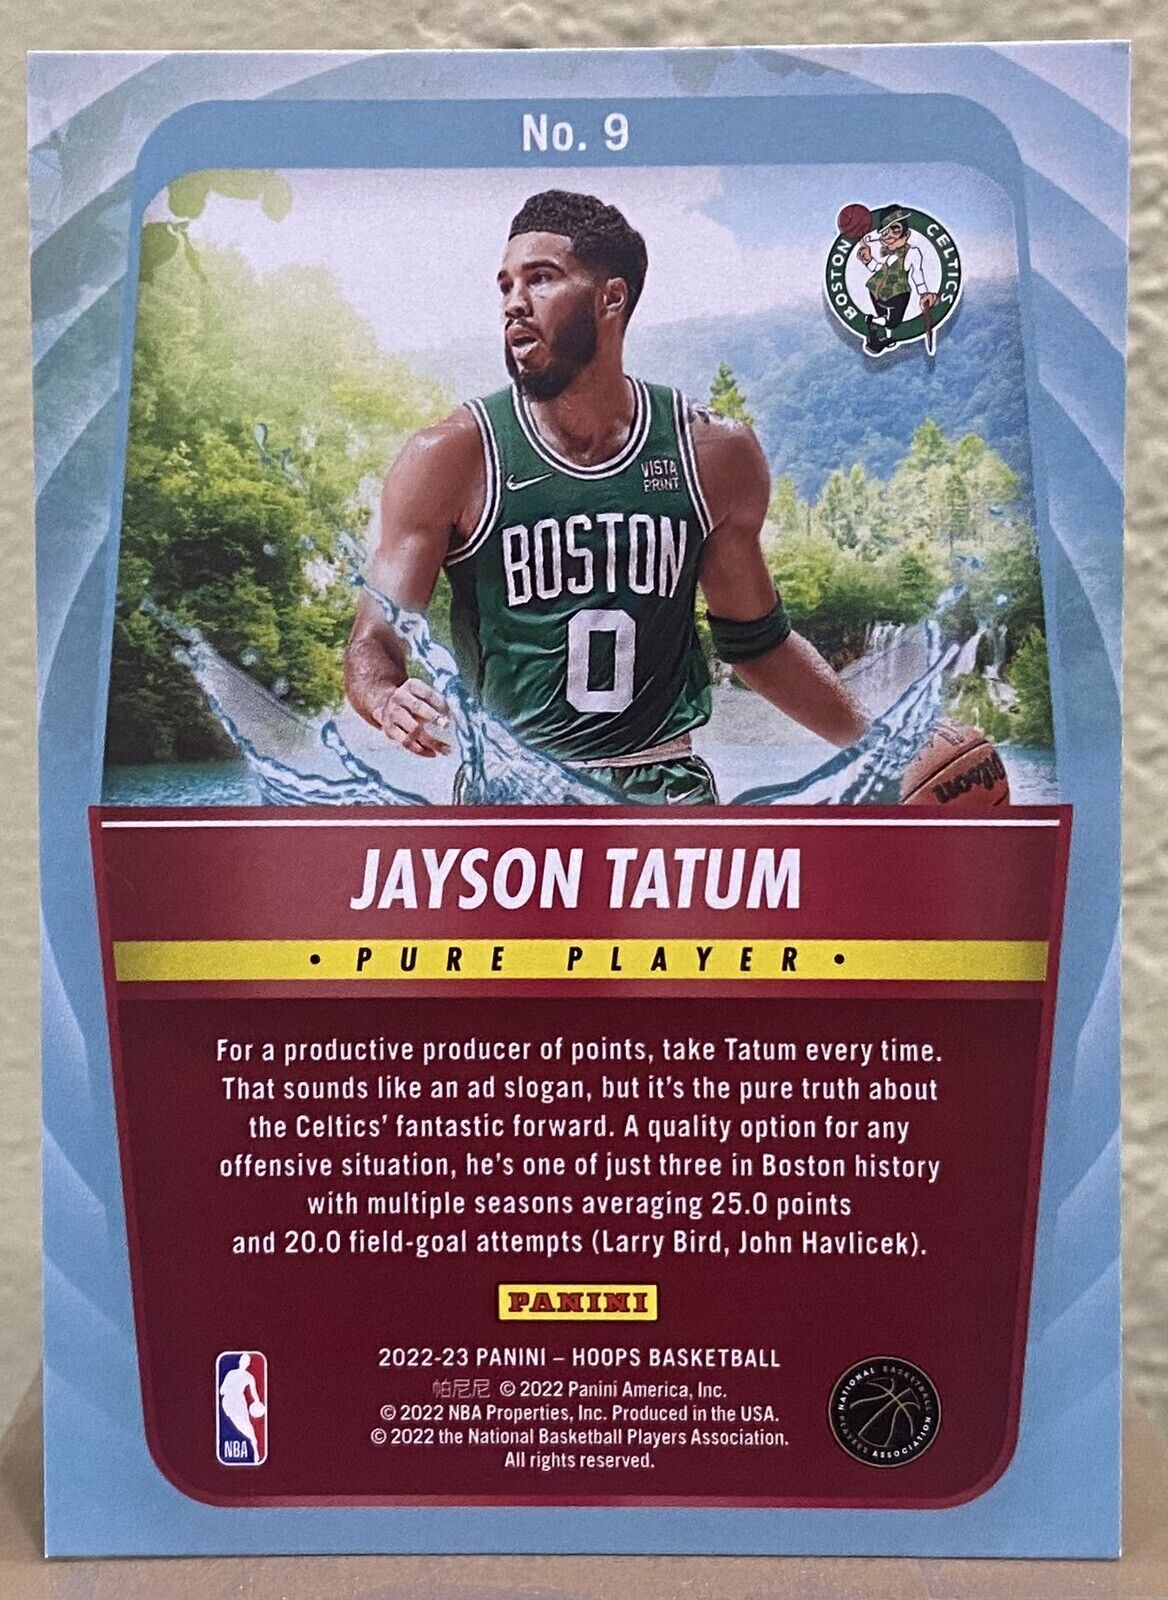 Jayson Tatum 2022 2023 HOOPS Basketball Series Mint Card #1